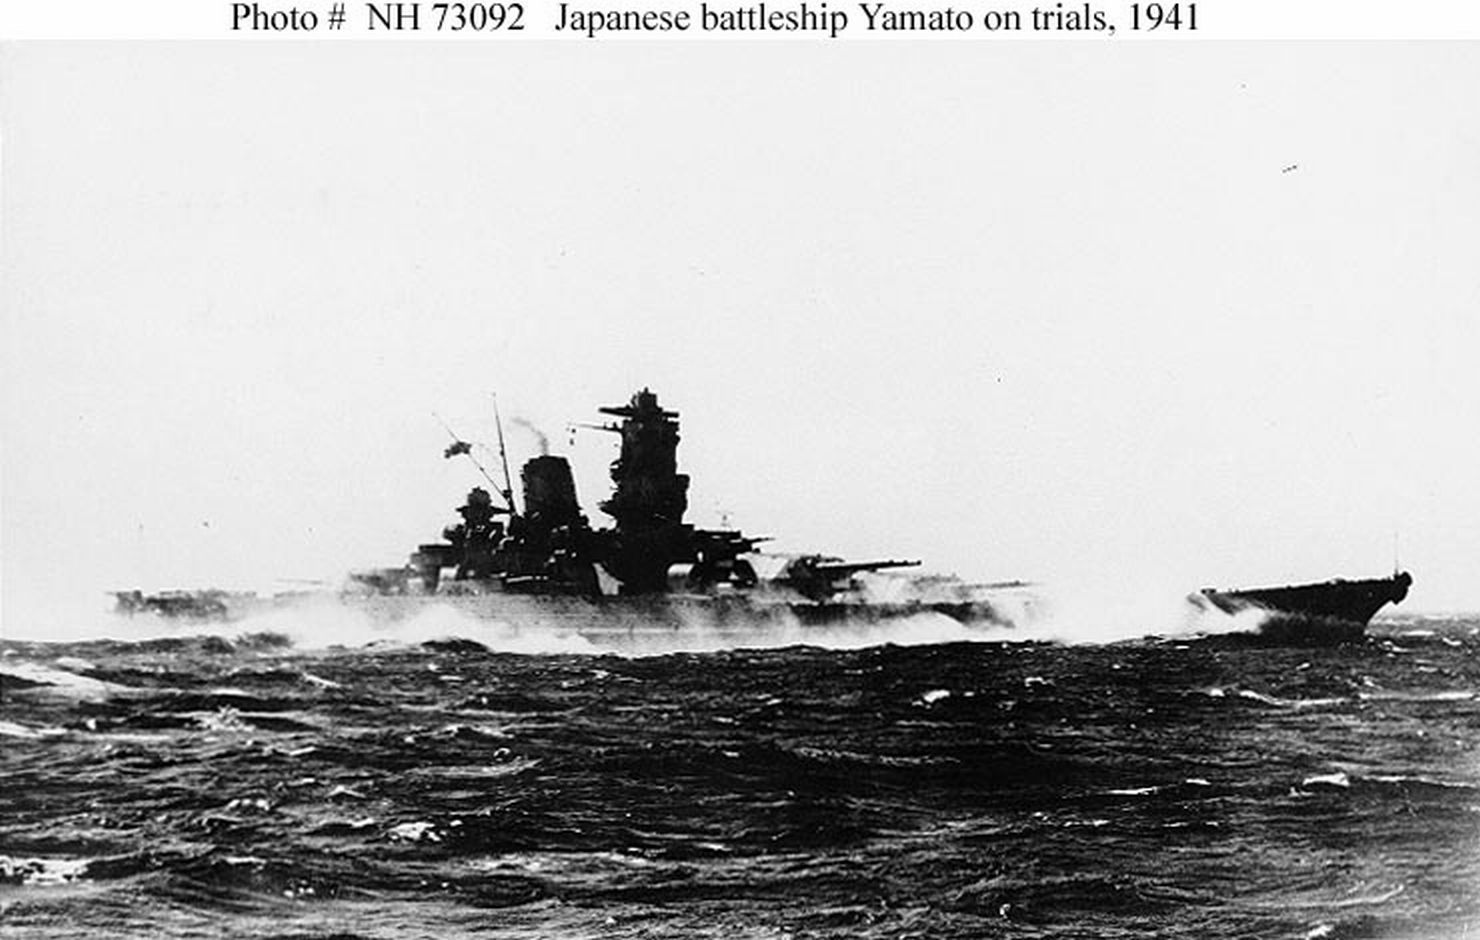 Yamato_on_trials_1941